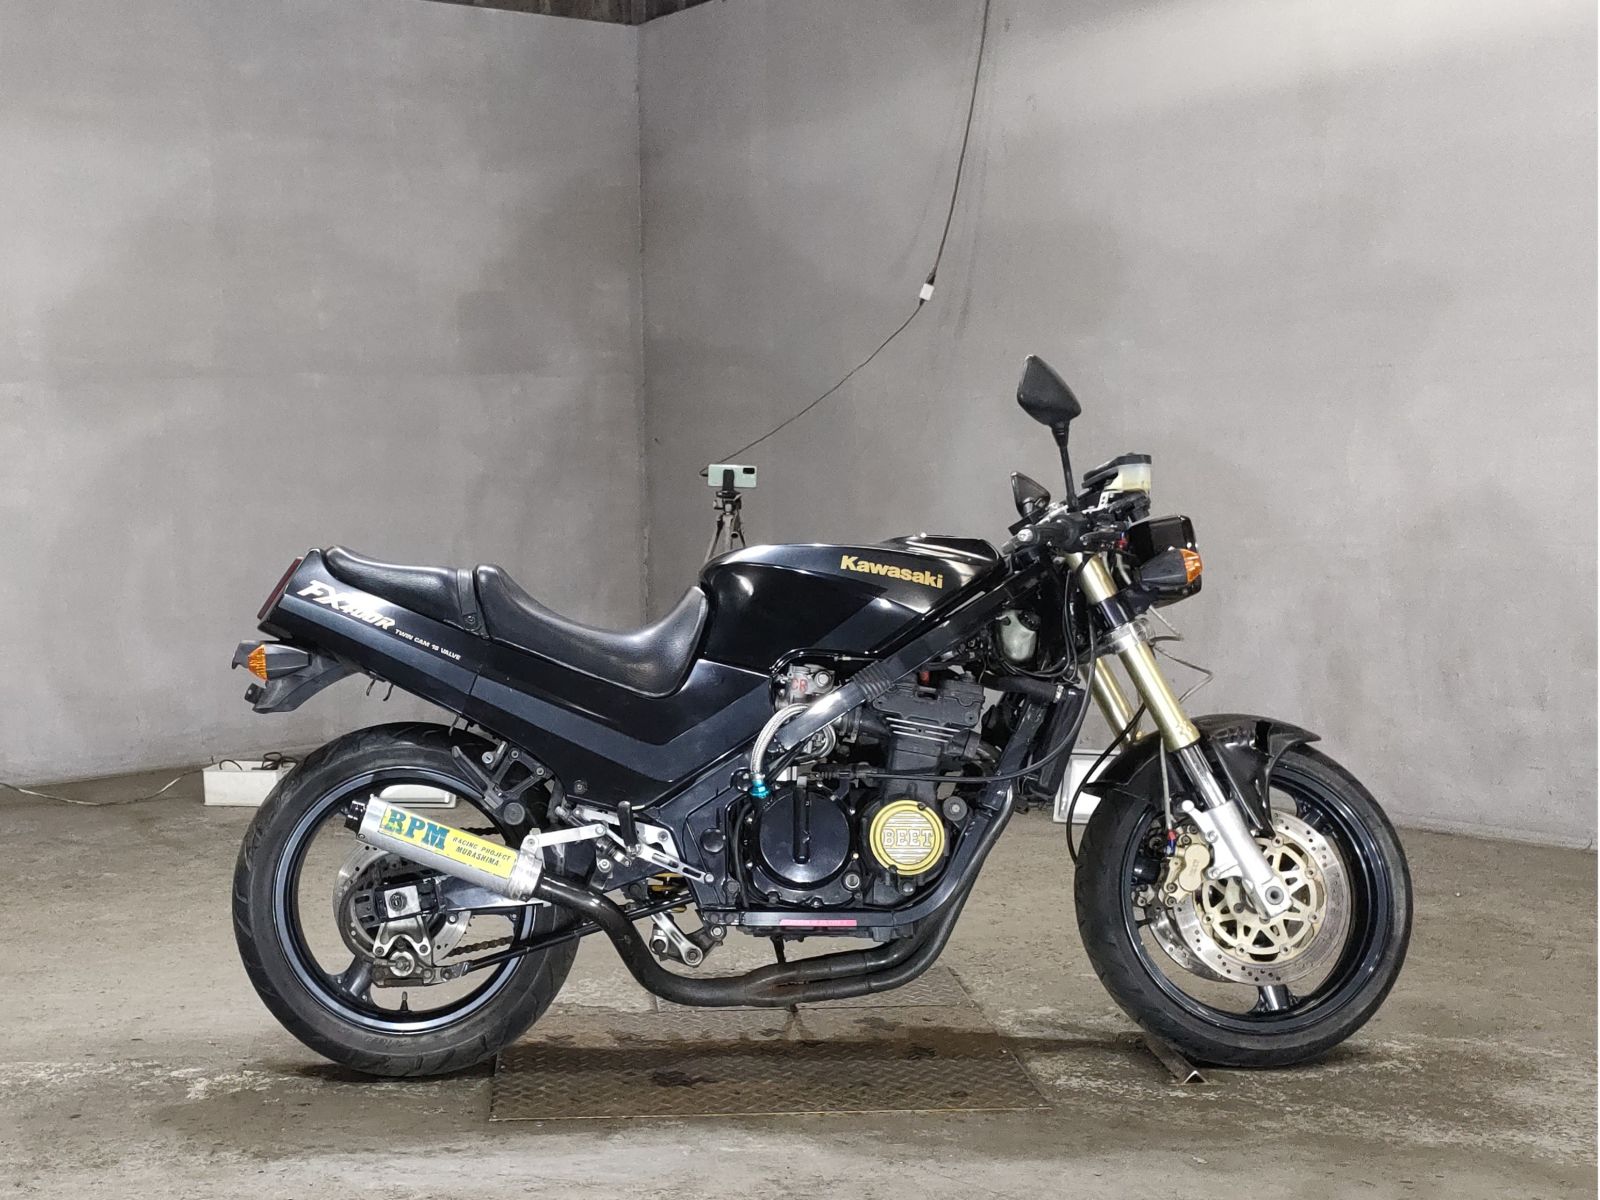 Kawasaki FX 400R ZX400D - купить недорого